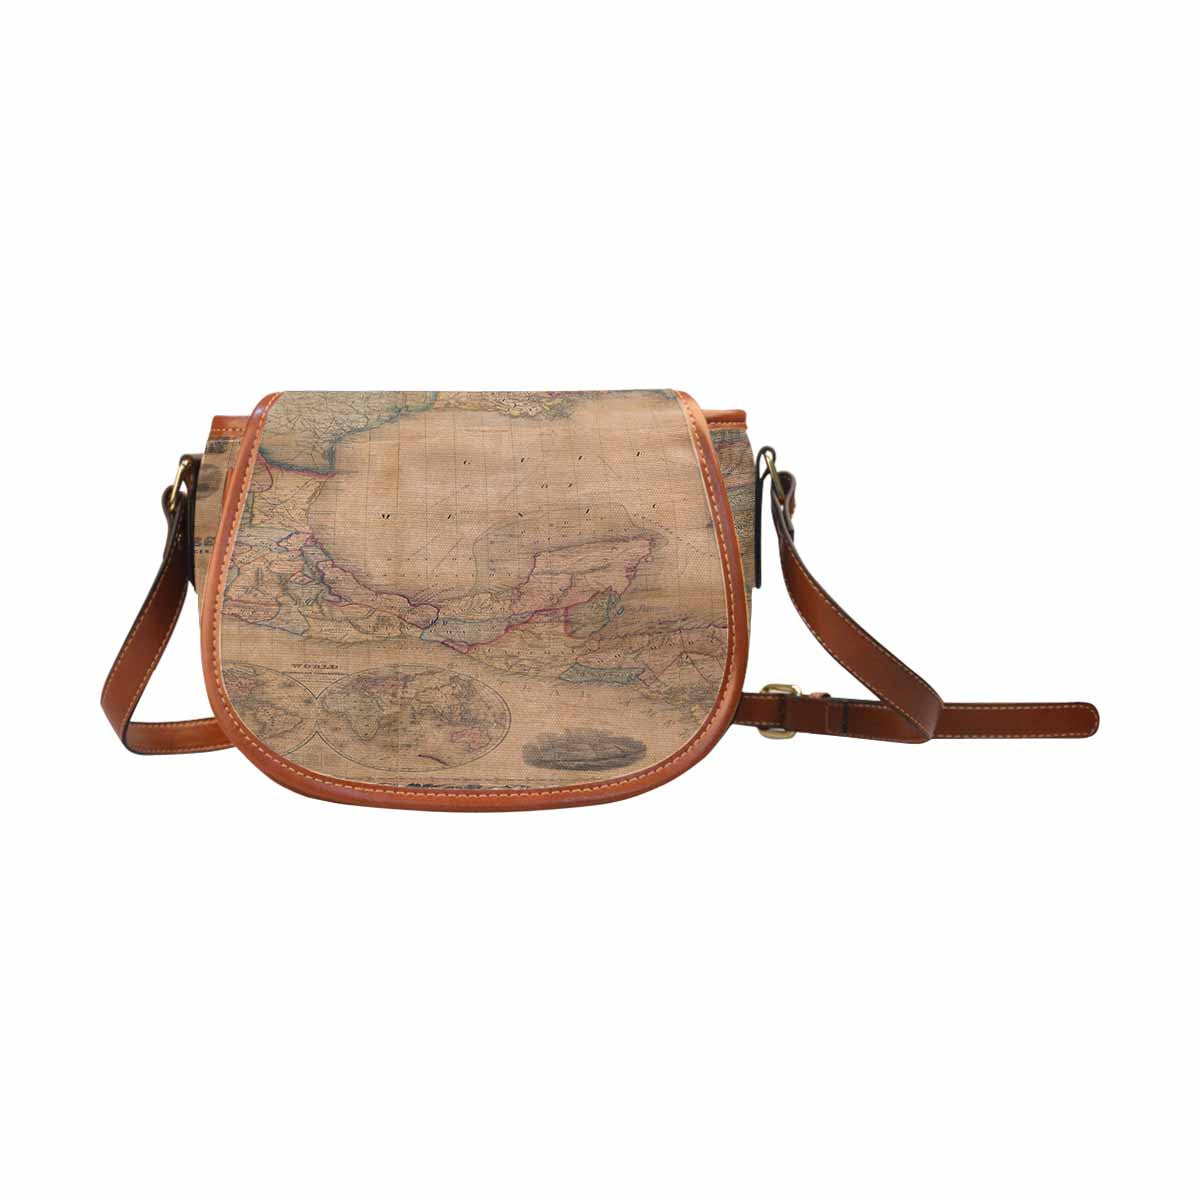 Antique Map design Handbag, saddle bag, Design 28